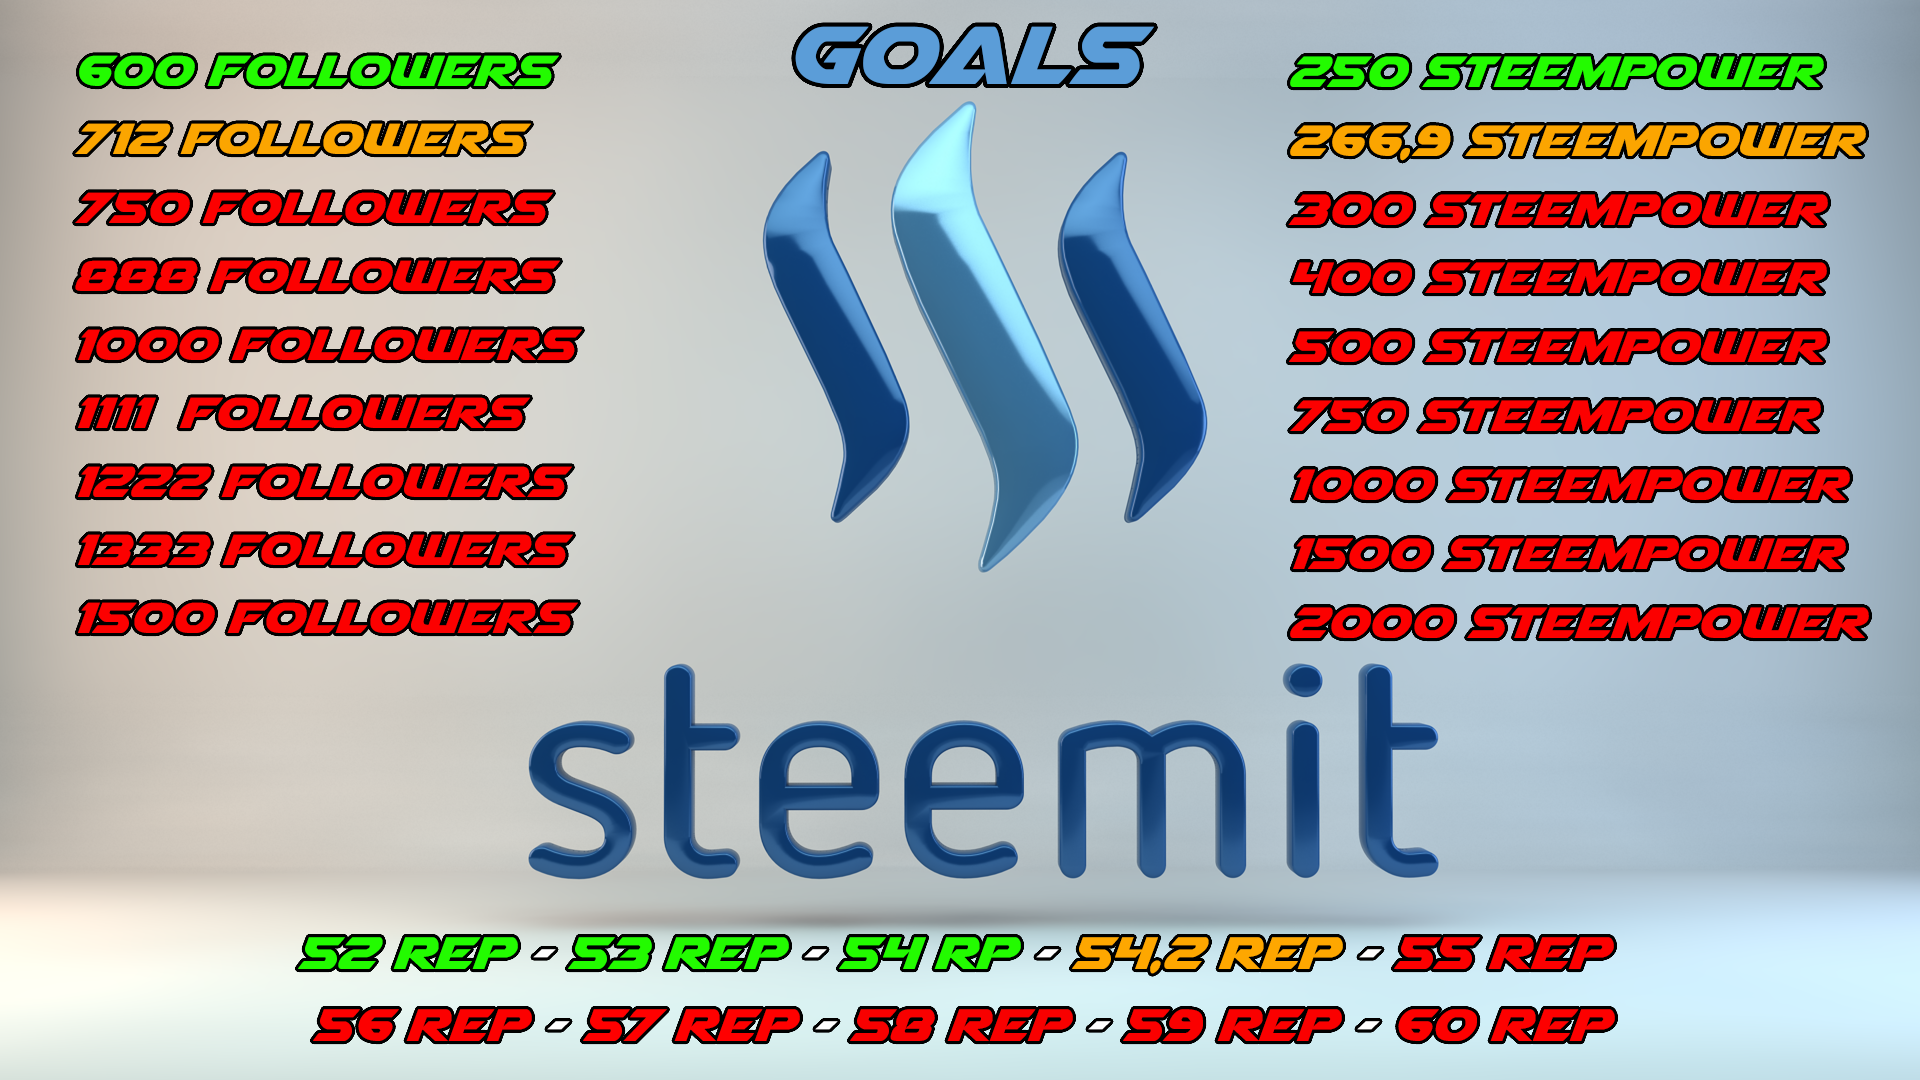 Steemit_Goals_20180111.png